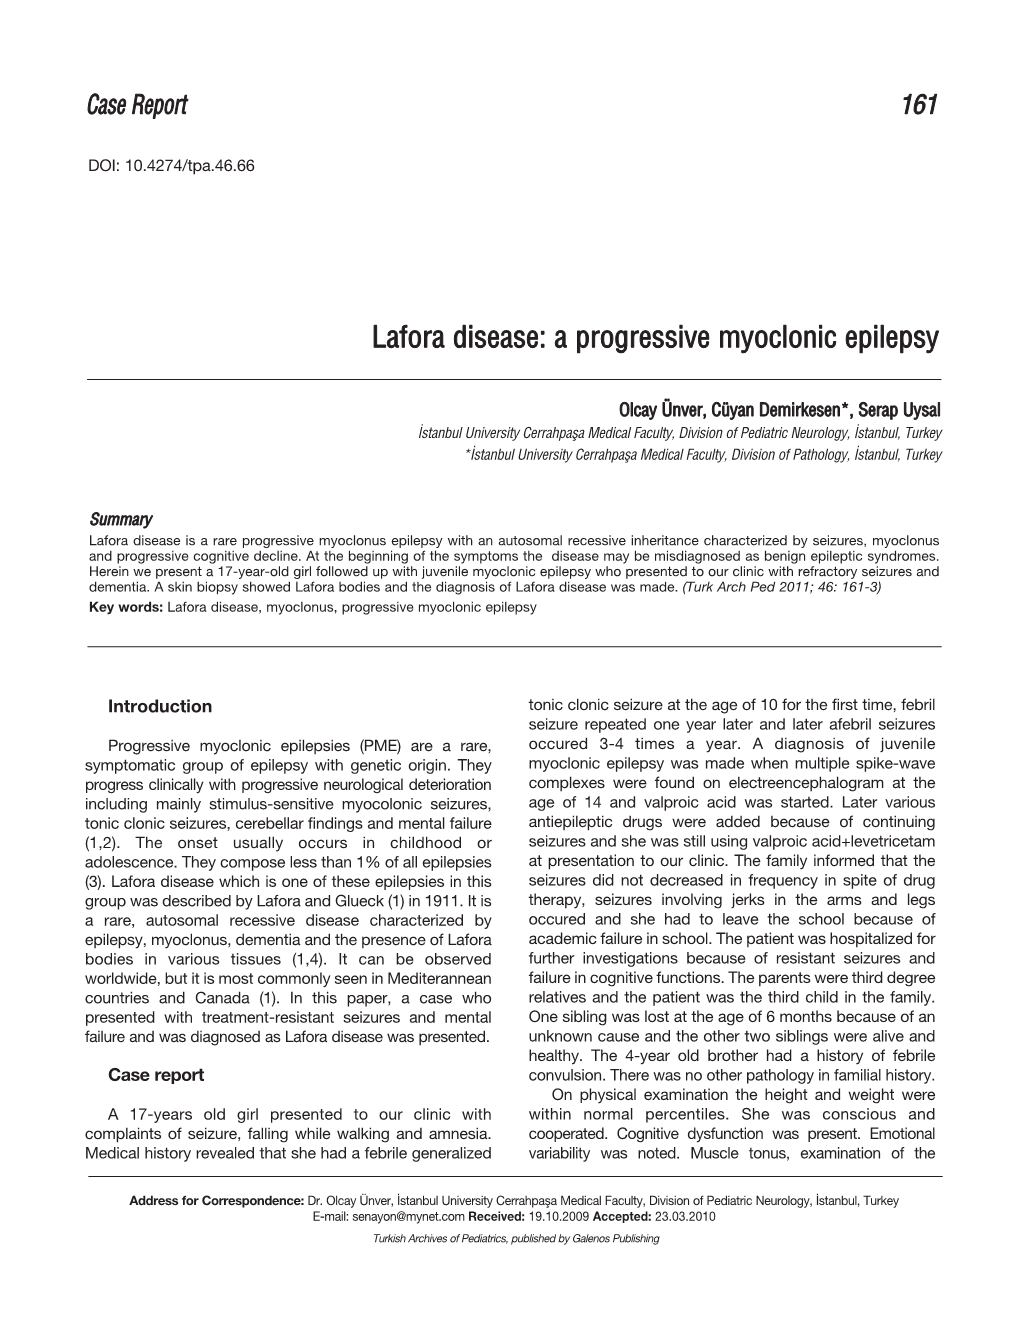 Lafora Disease: a Progressive Myoclonic Epilepsy